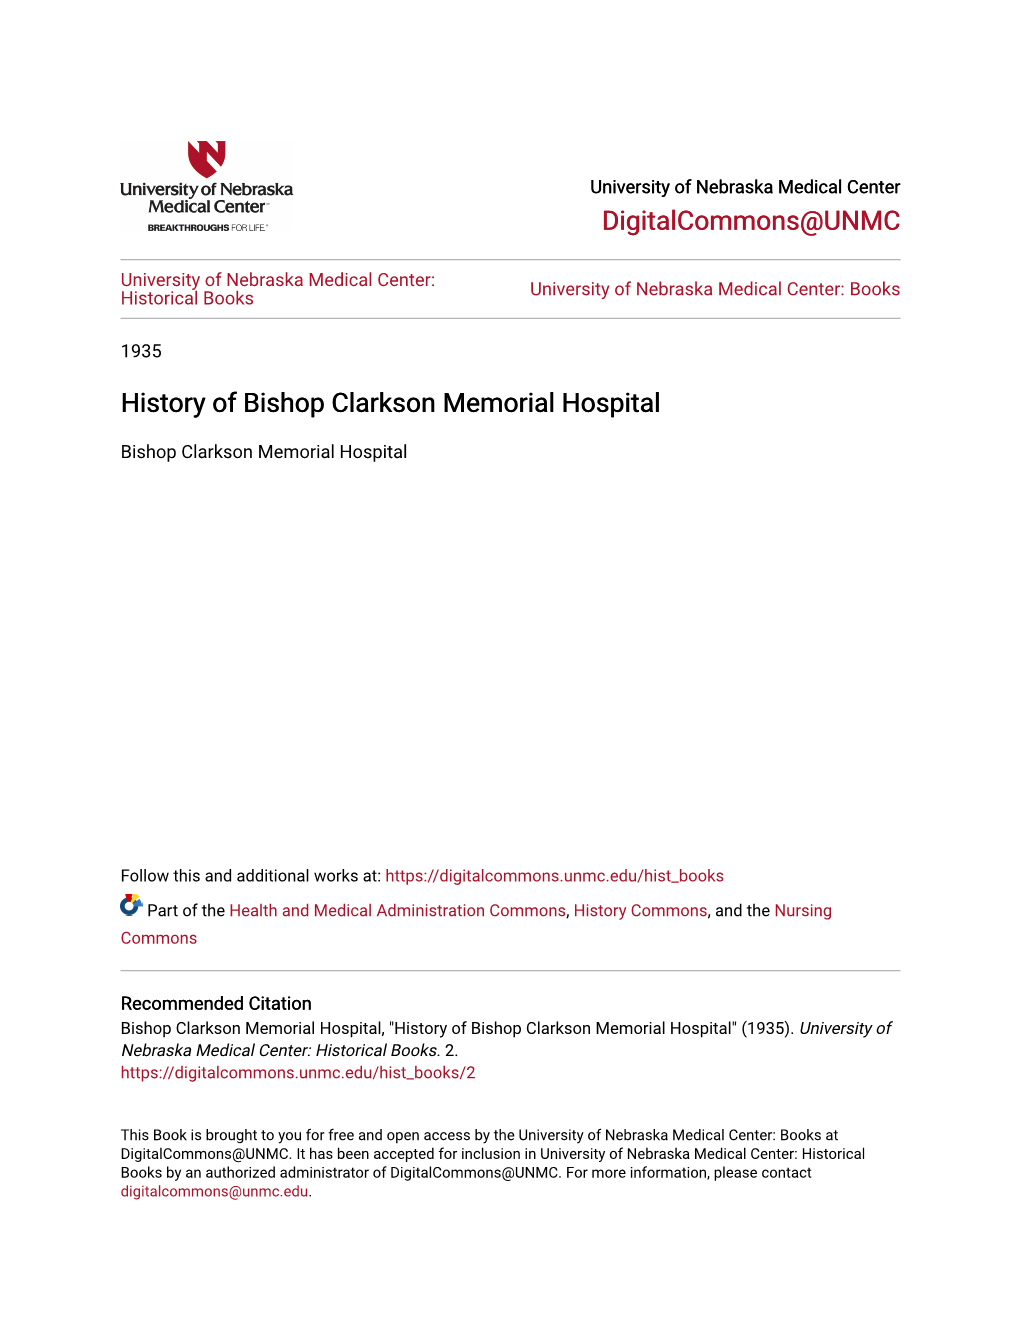 History of Bishop Clarkson Memorial Hospital